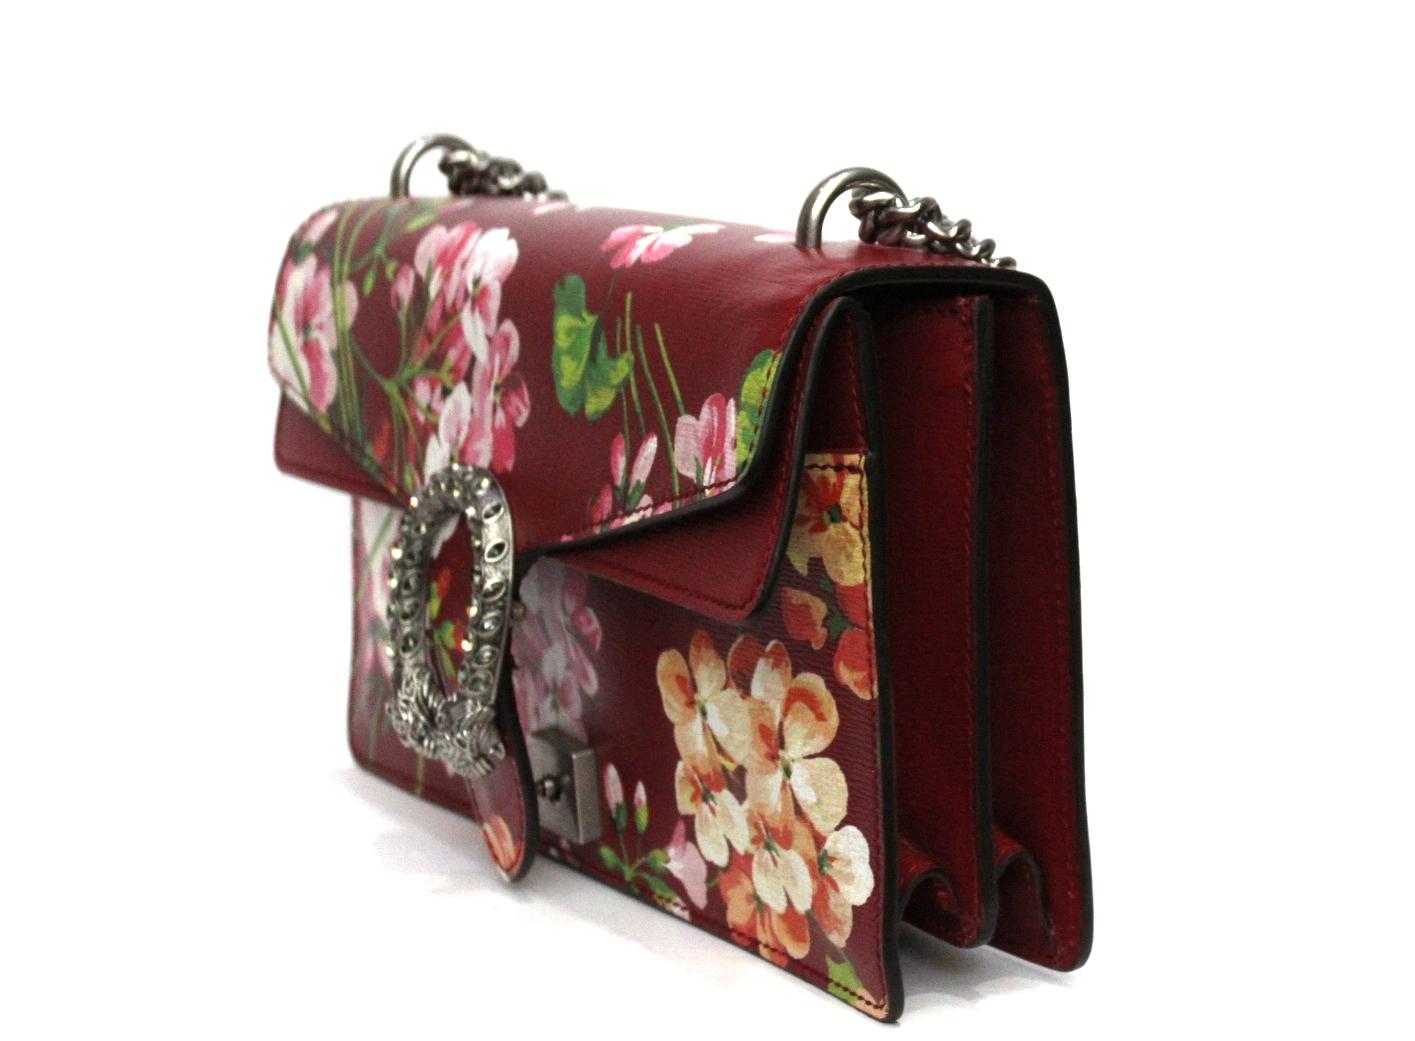 Gucci Dionysus Blooms Cherry Leather Shoulder Bag 2